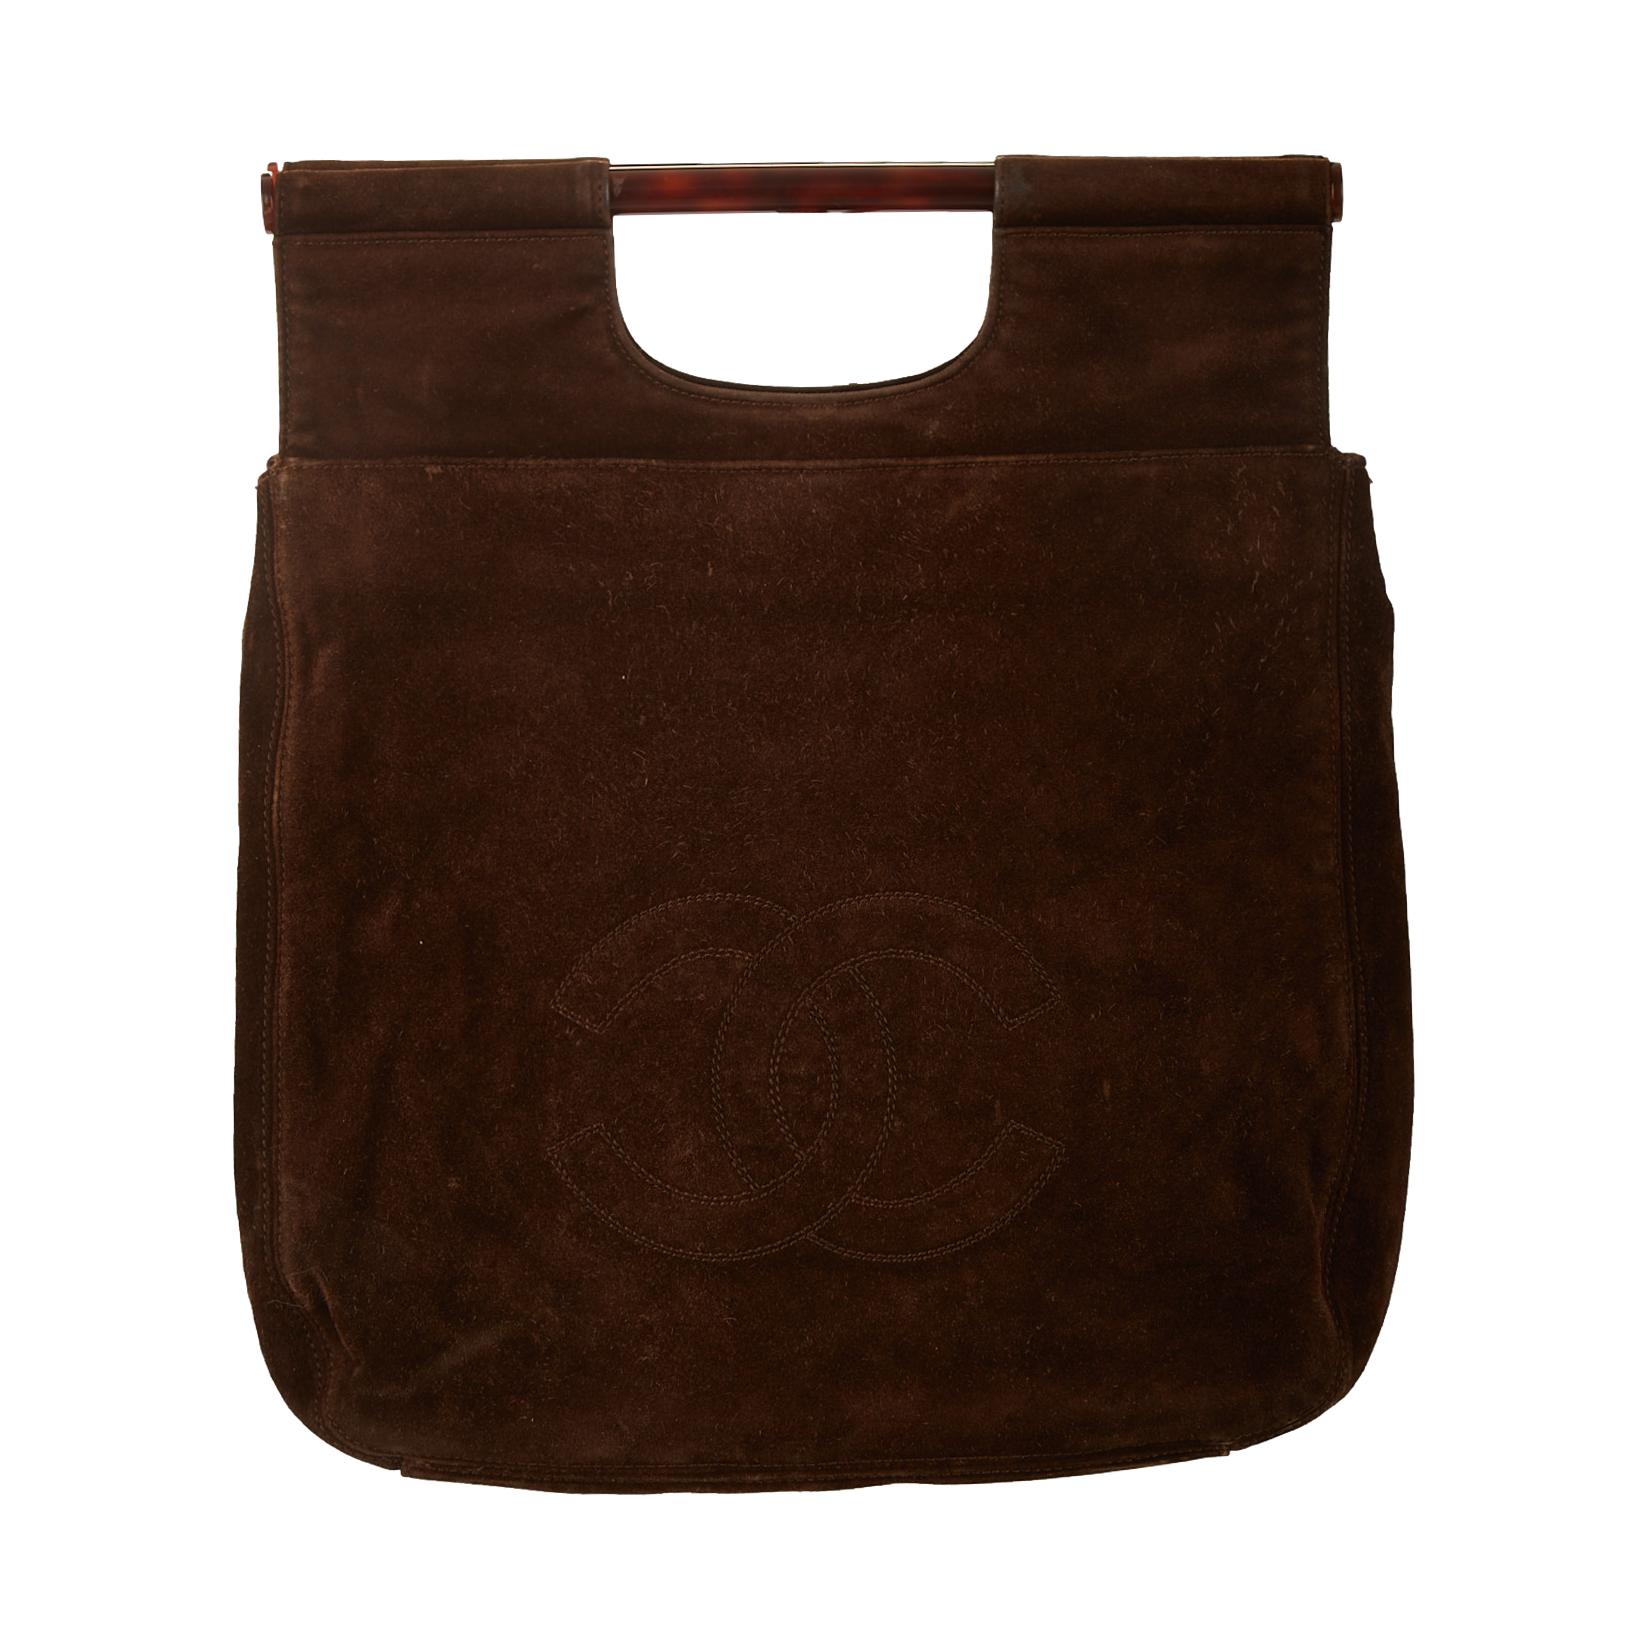 Authentic CHANEL Vintage Logo Shoulder Bag Tote Bag Brown Suede CHIC 🌻🌻